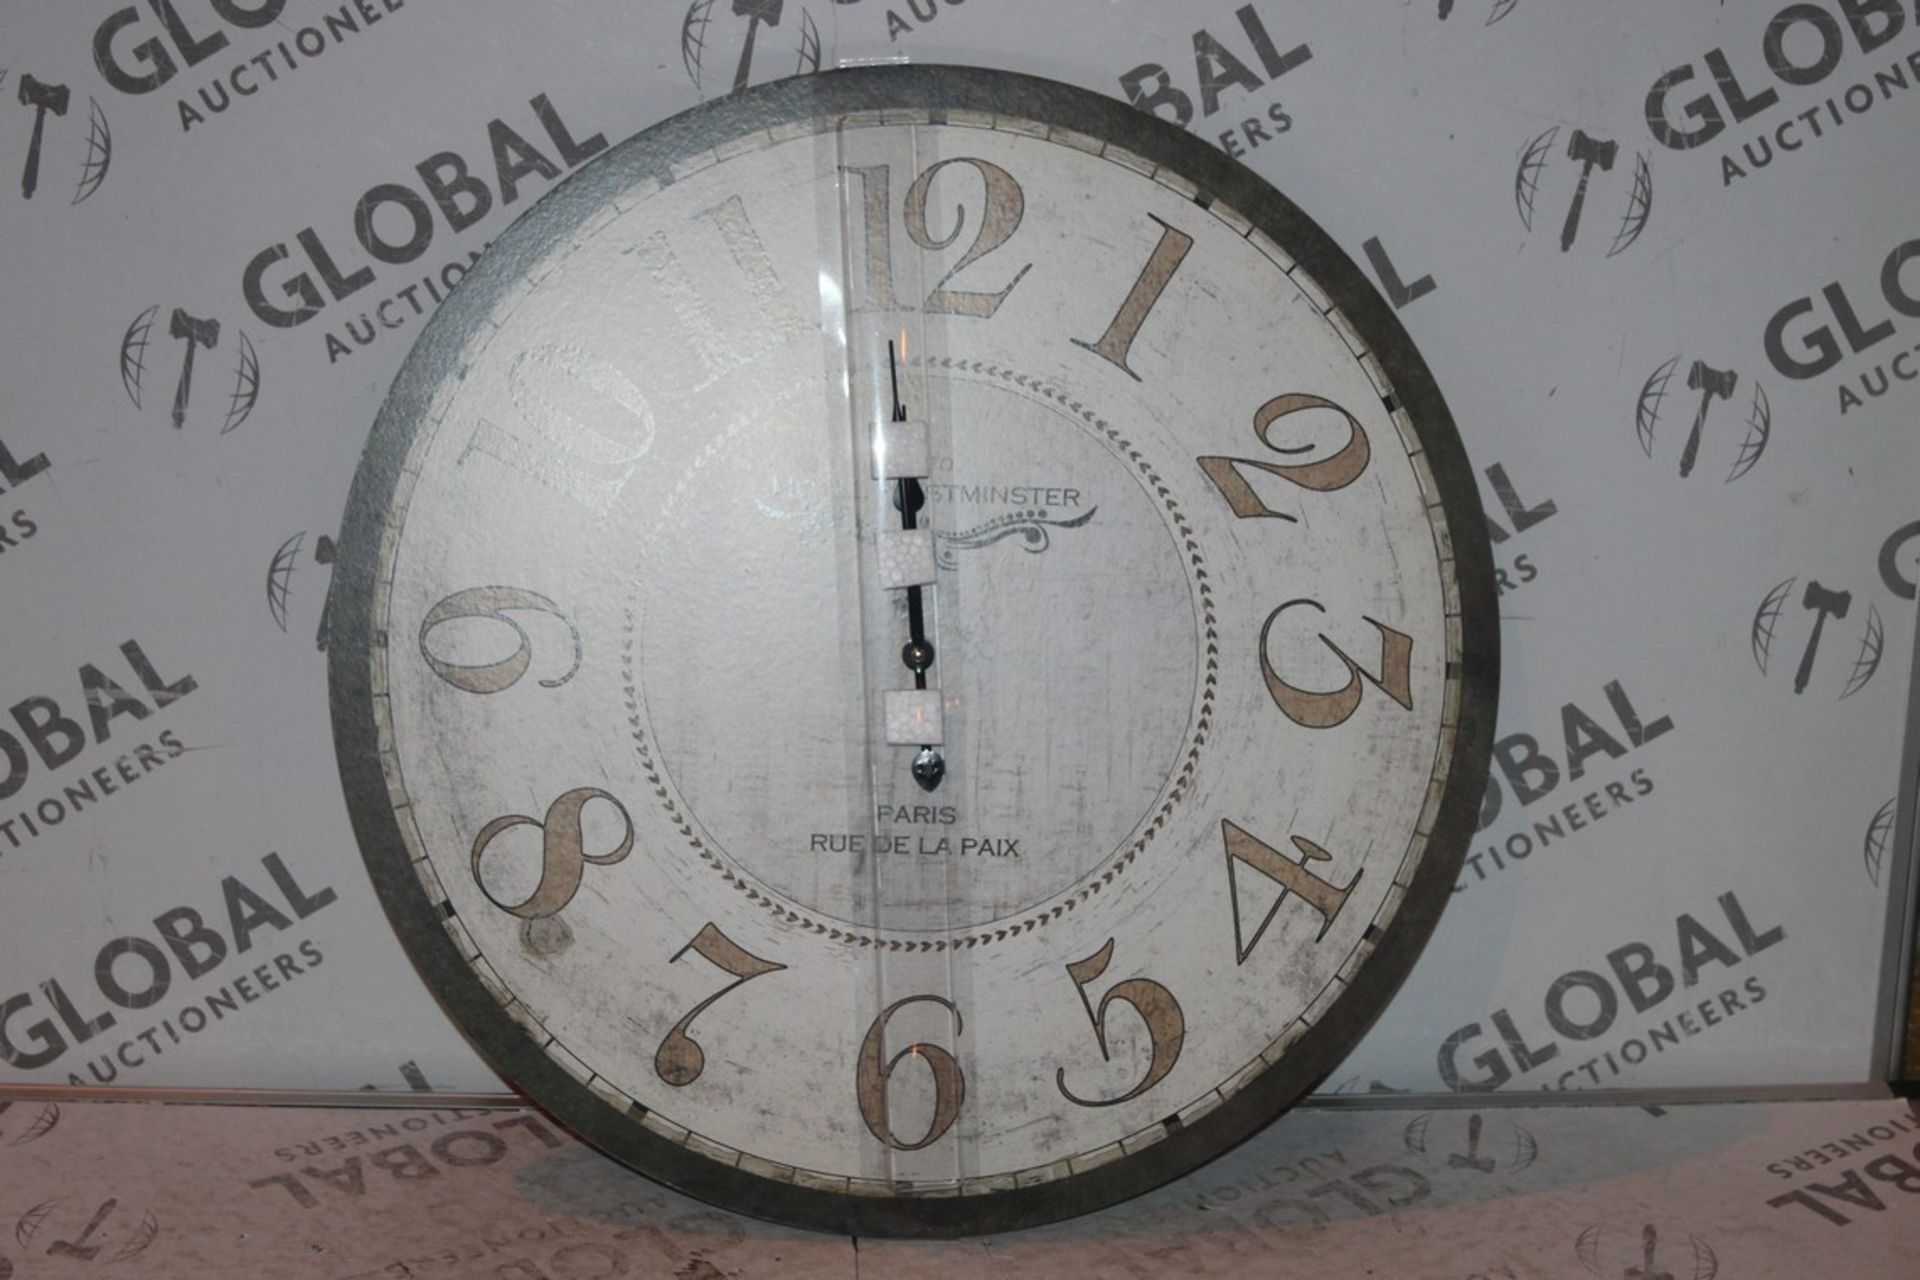 Lot To Contain 2 Paris Rue De La Paix Wall Clock Combined RRP £60 (17184) (10.1.20) (Public